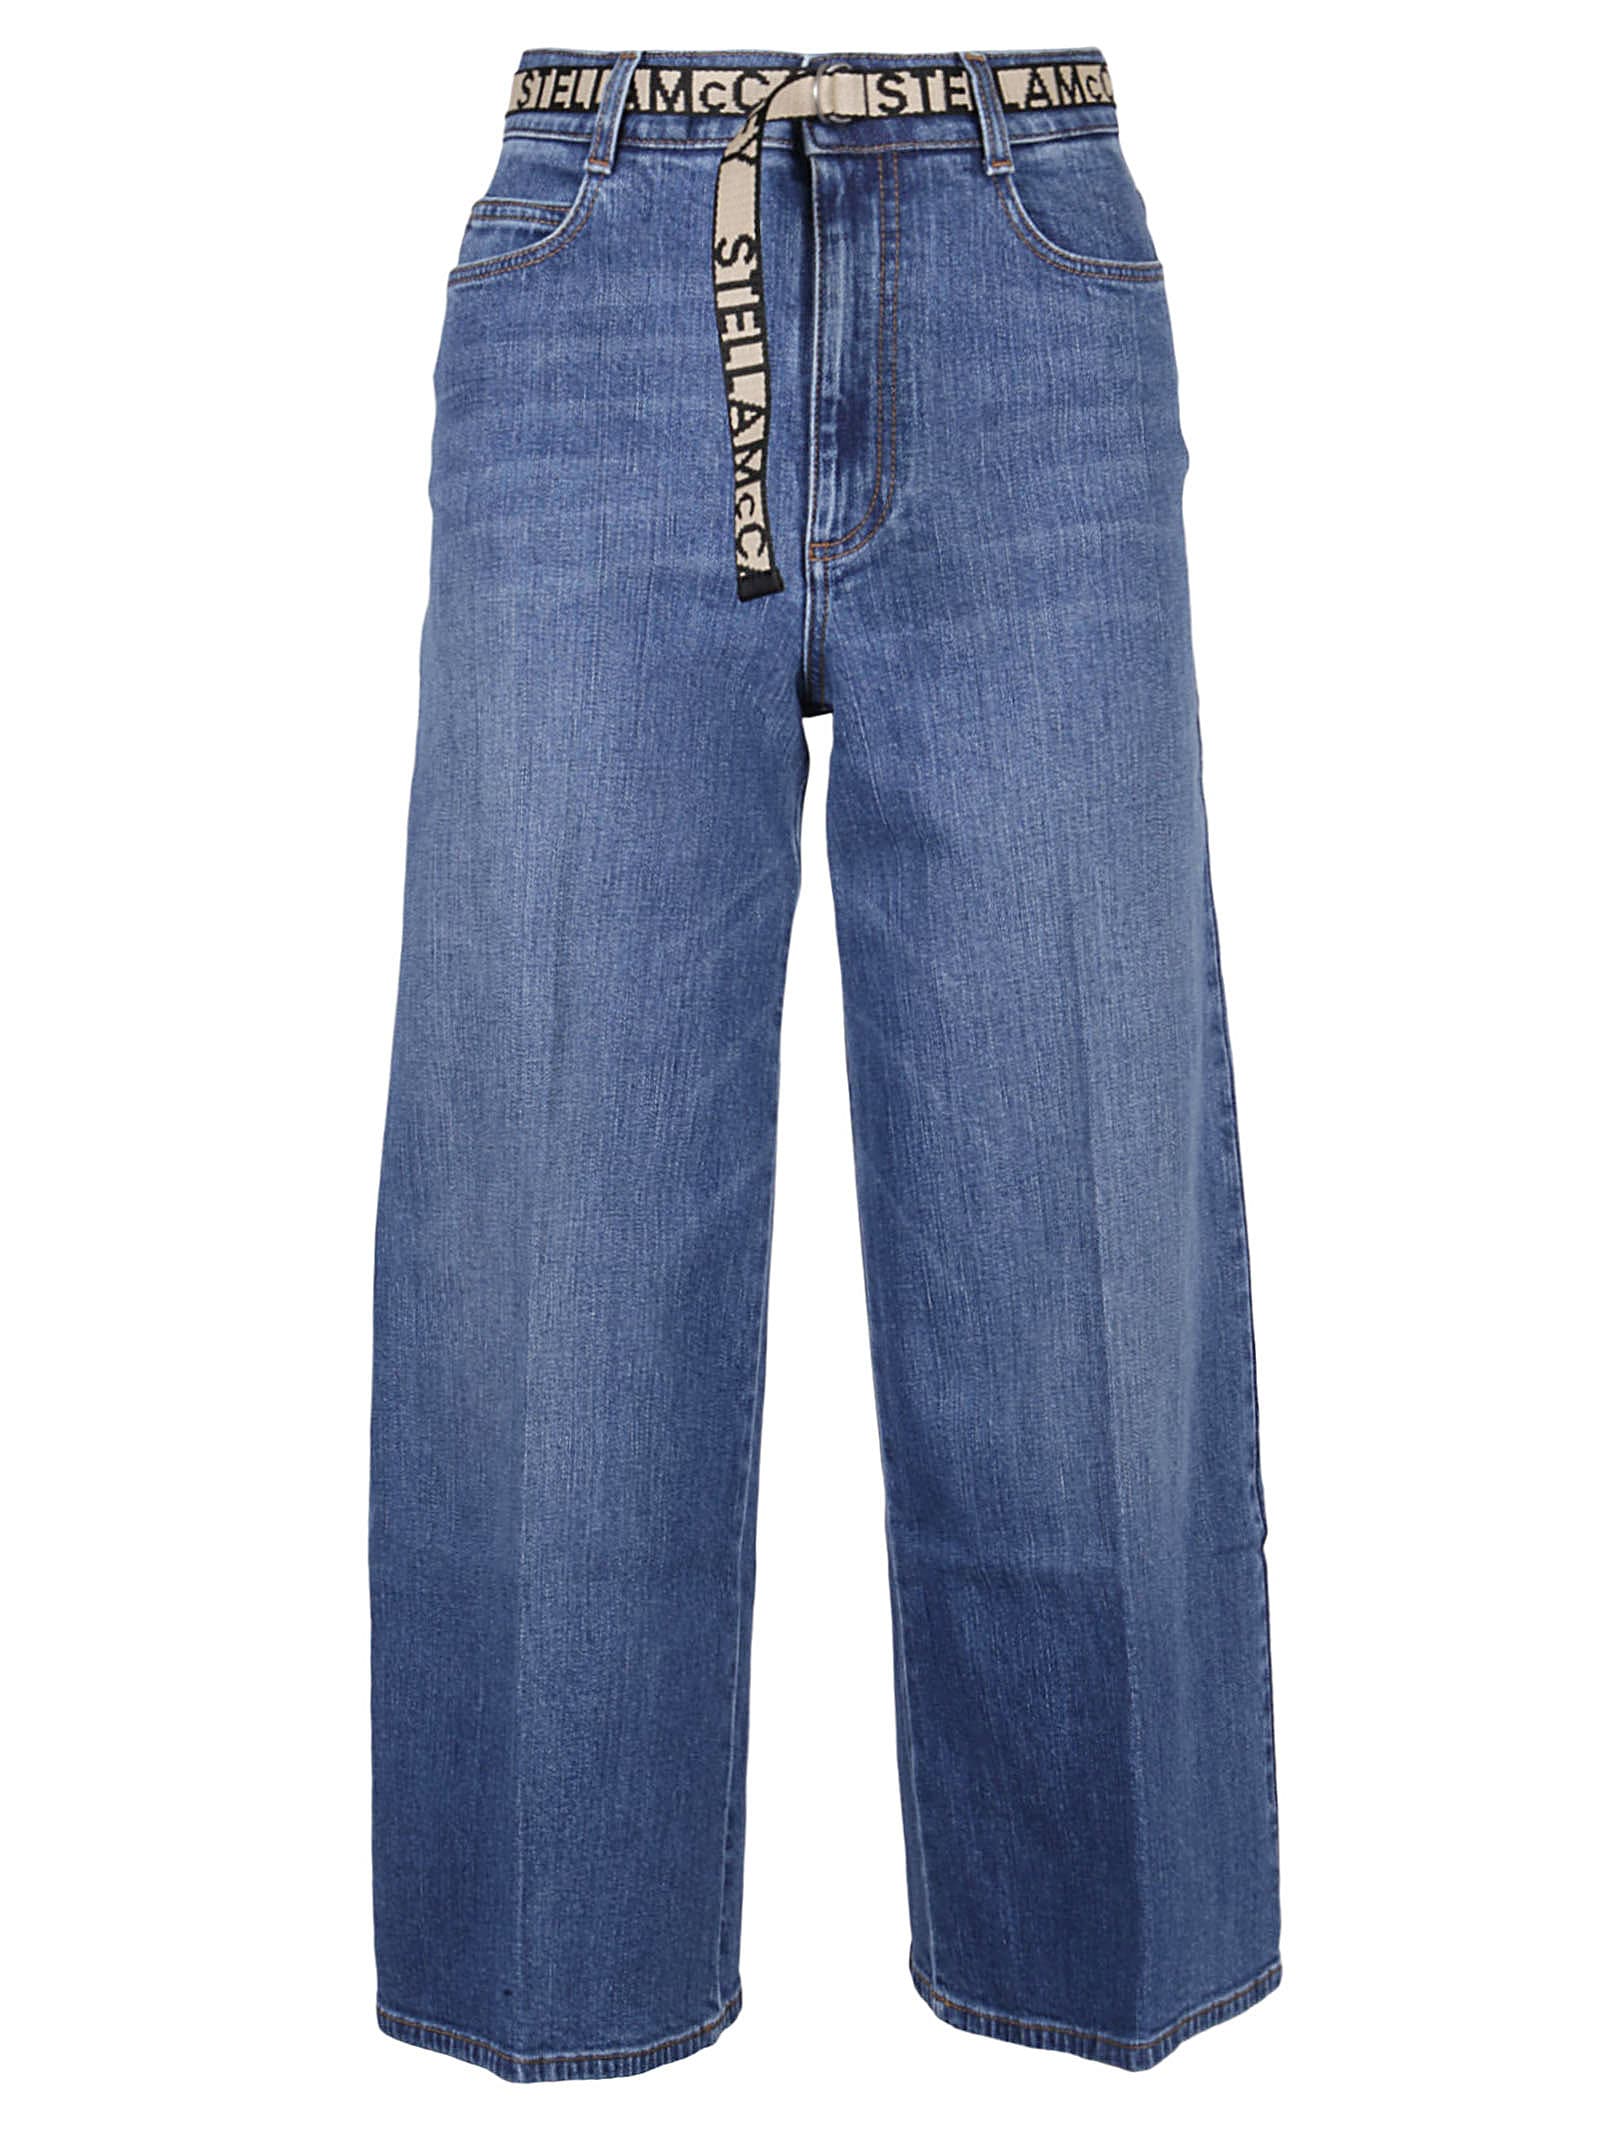 Stella McCartney High Rise Denim Jeans